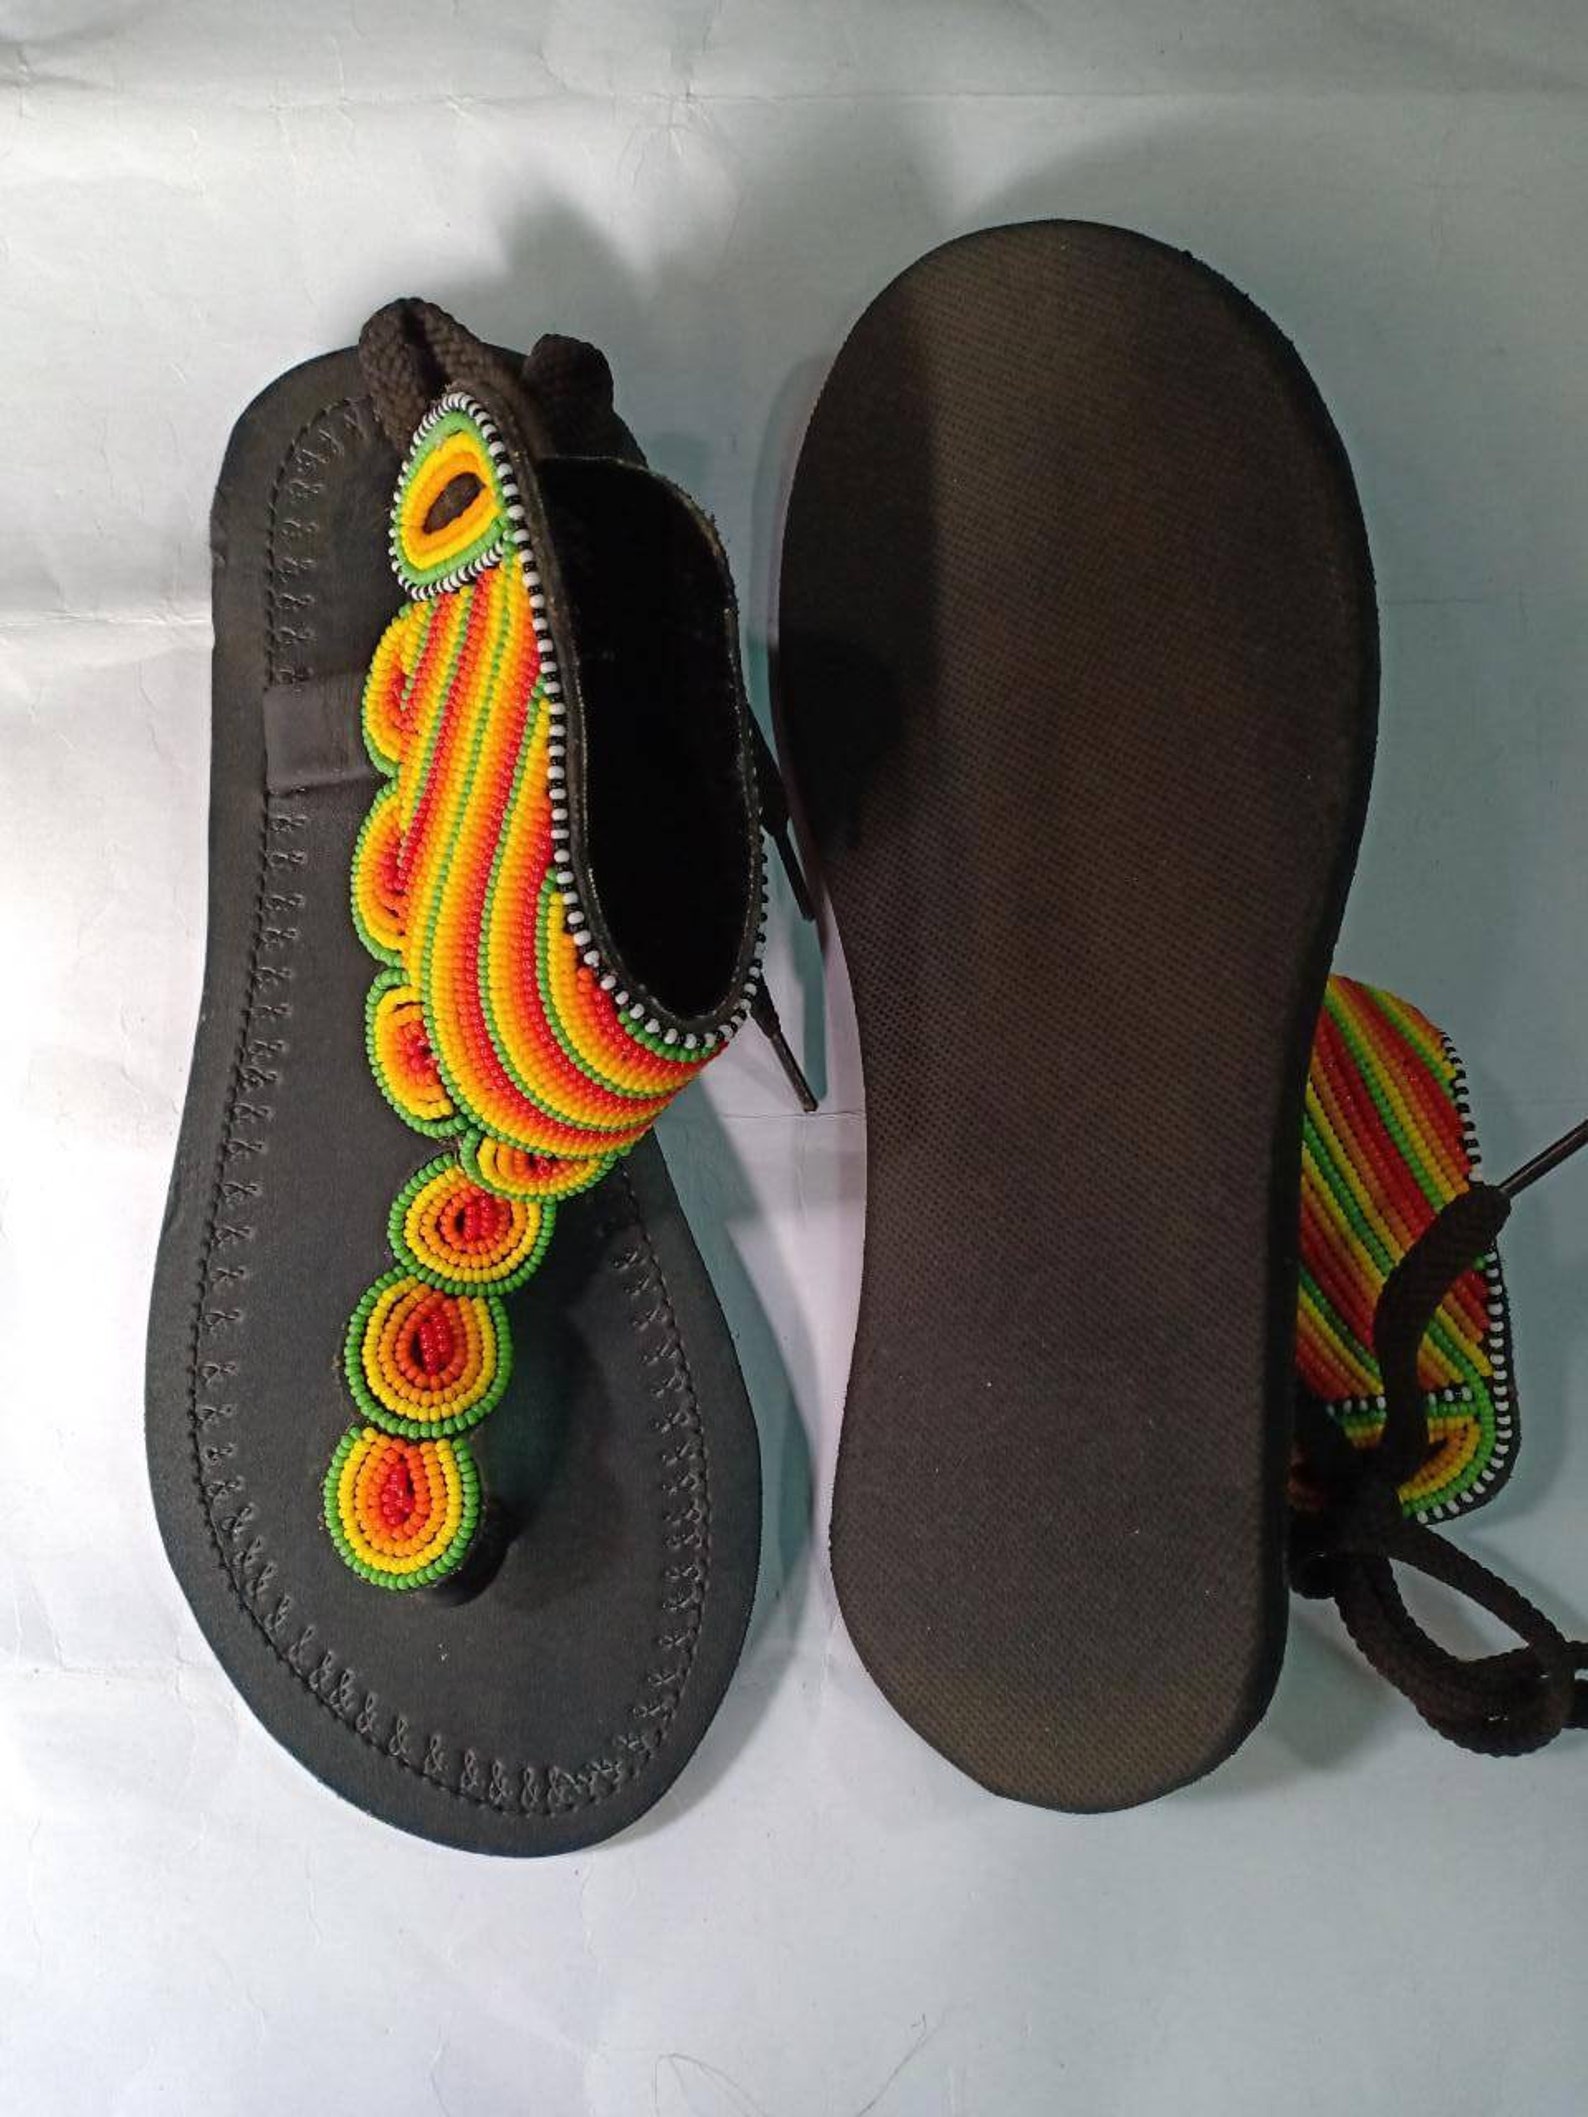 African Leather Sandals Women Sandals Summer Sandals - Etsy